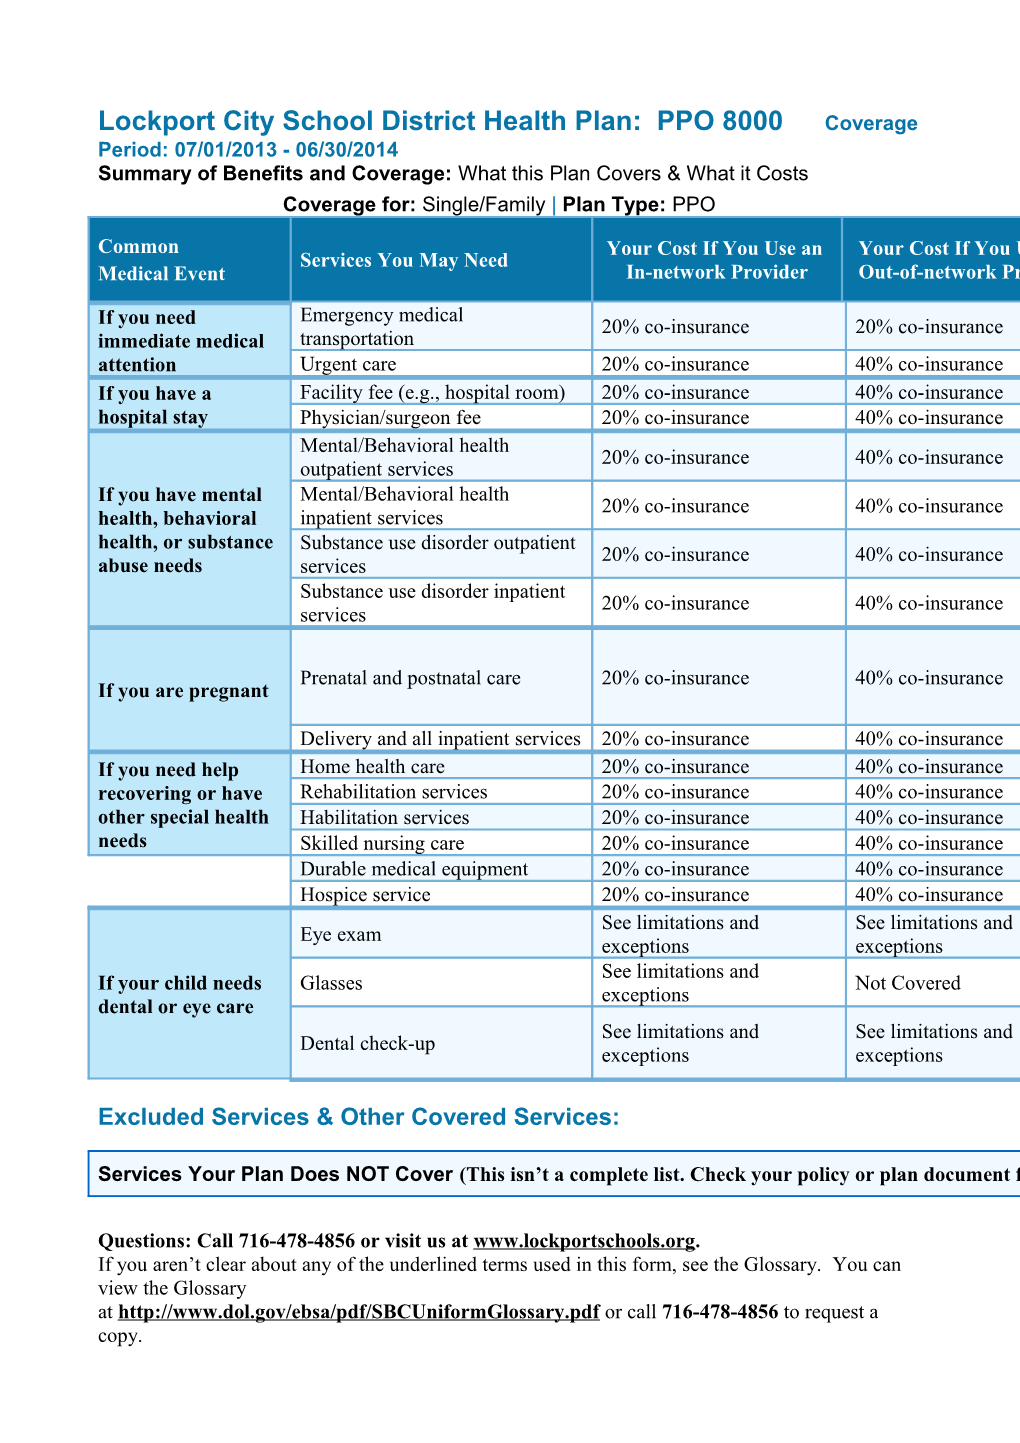 Lockport City School District Health Plan: PPO 8000 Coverage Period: 07/01/2013 - 06/30/2014